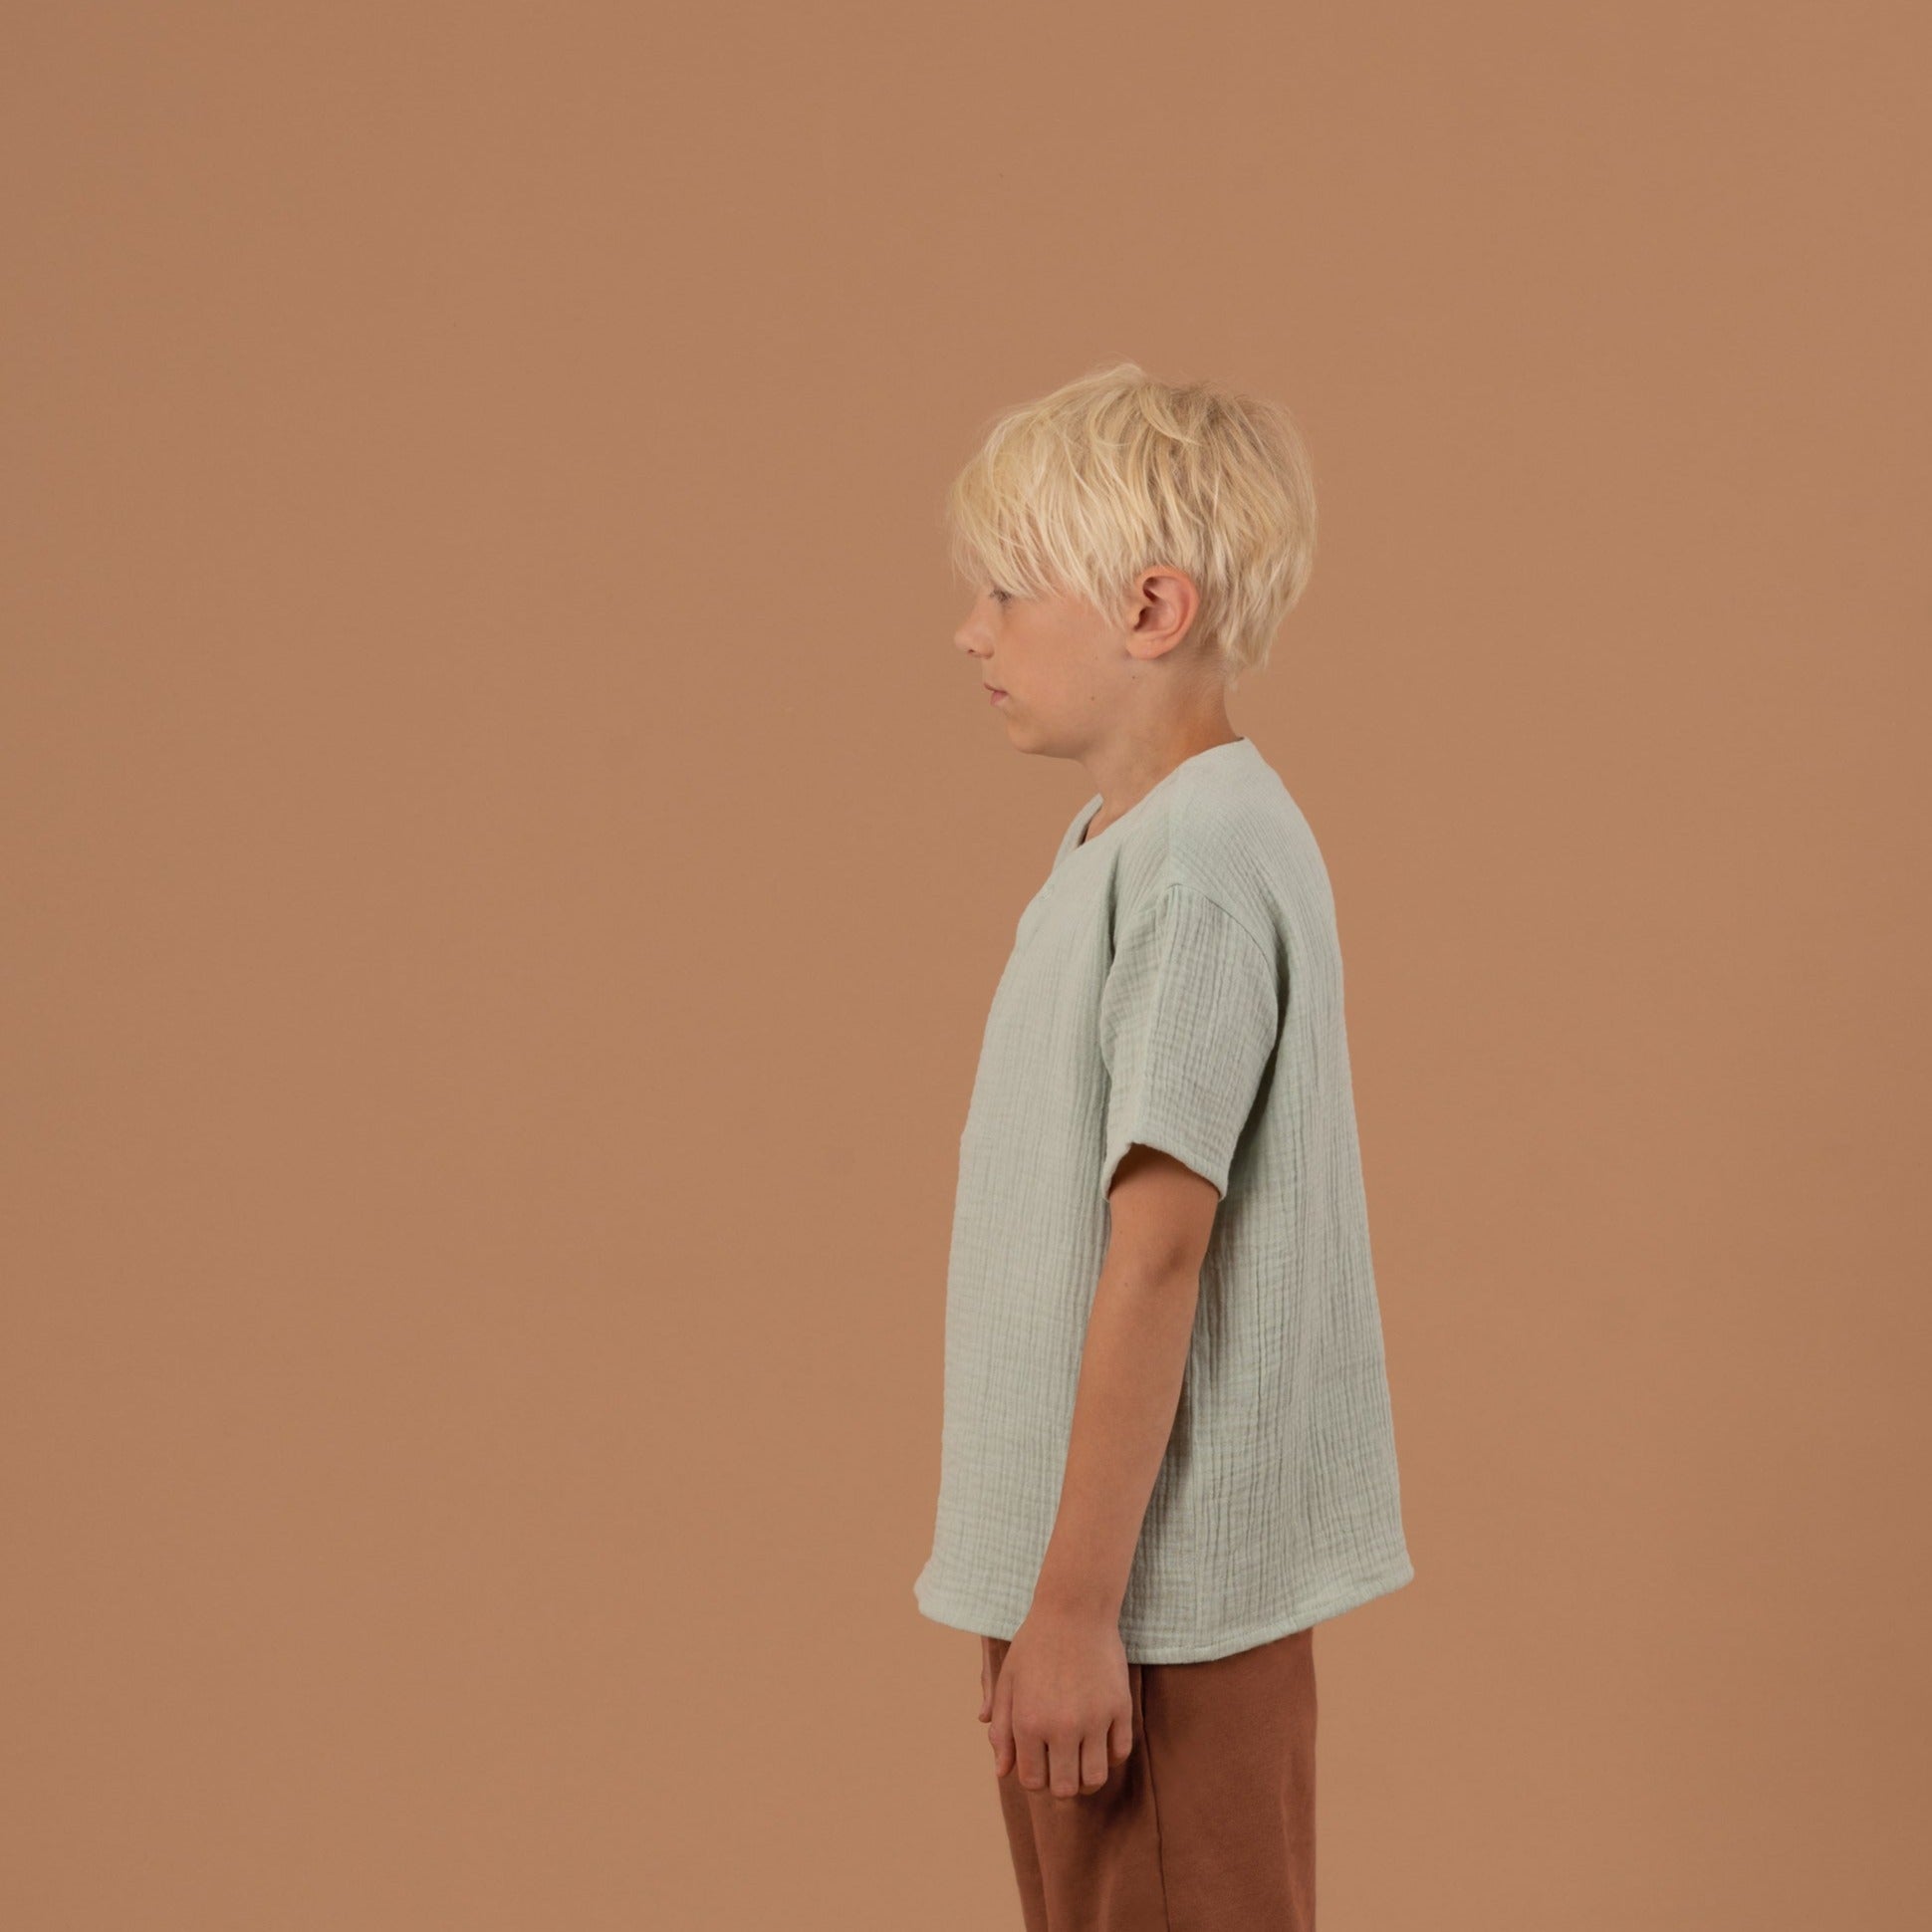 LEO Kindershirt Musselin Mint Seitenansicht links, Urheber: Mini & Eve